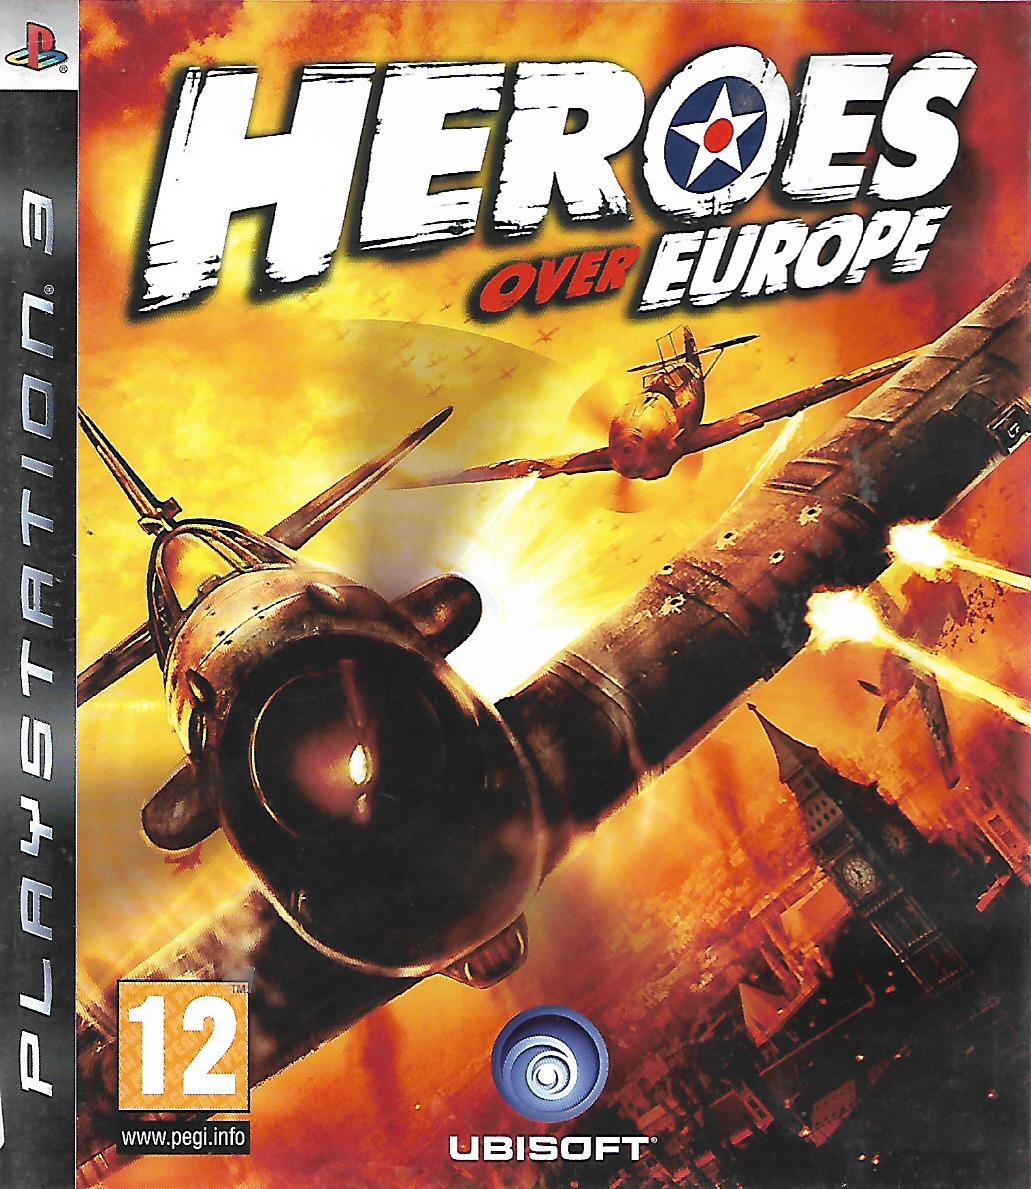 HEROES OVER EUROPE (PS3 - bazar)